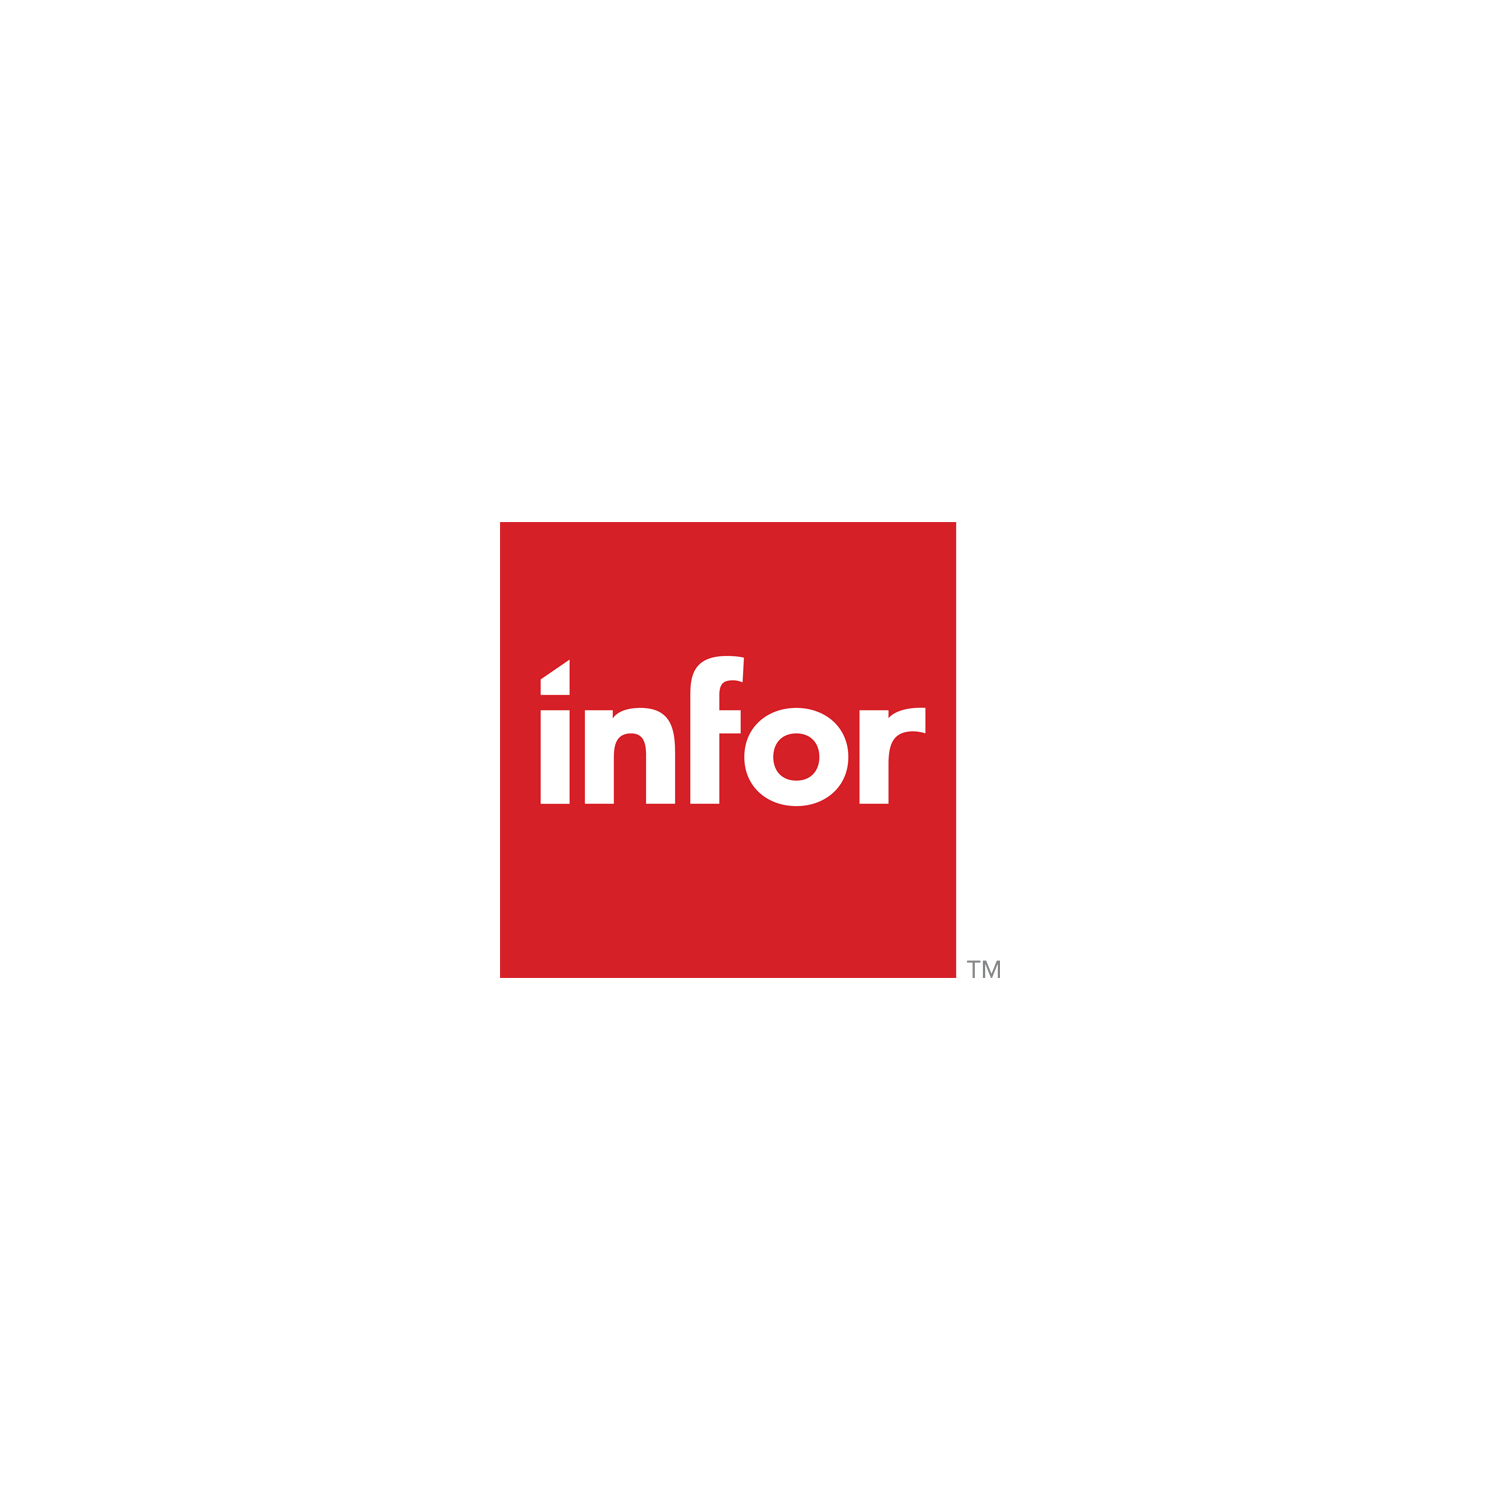 Infonor Logo photo - 1